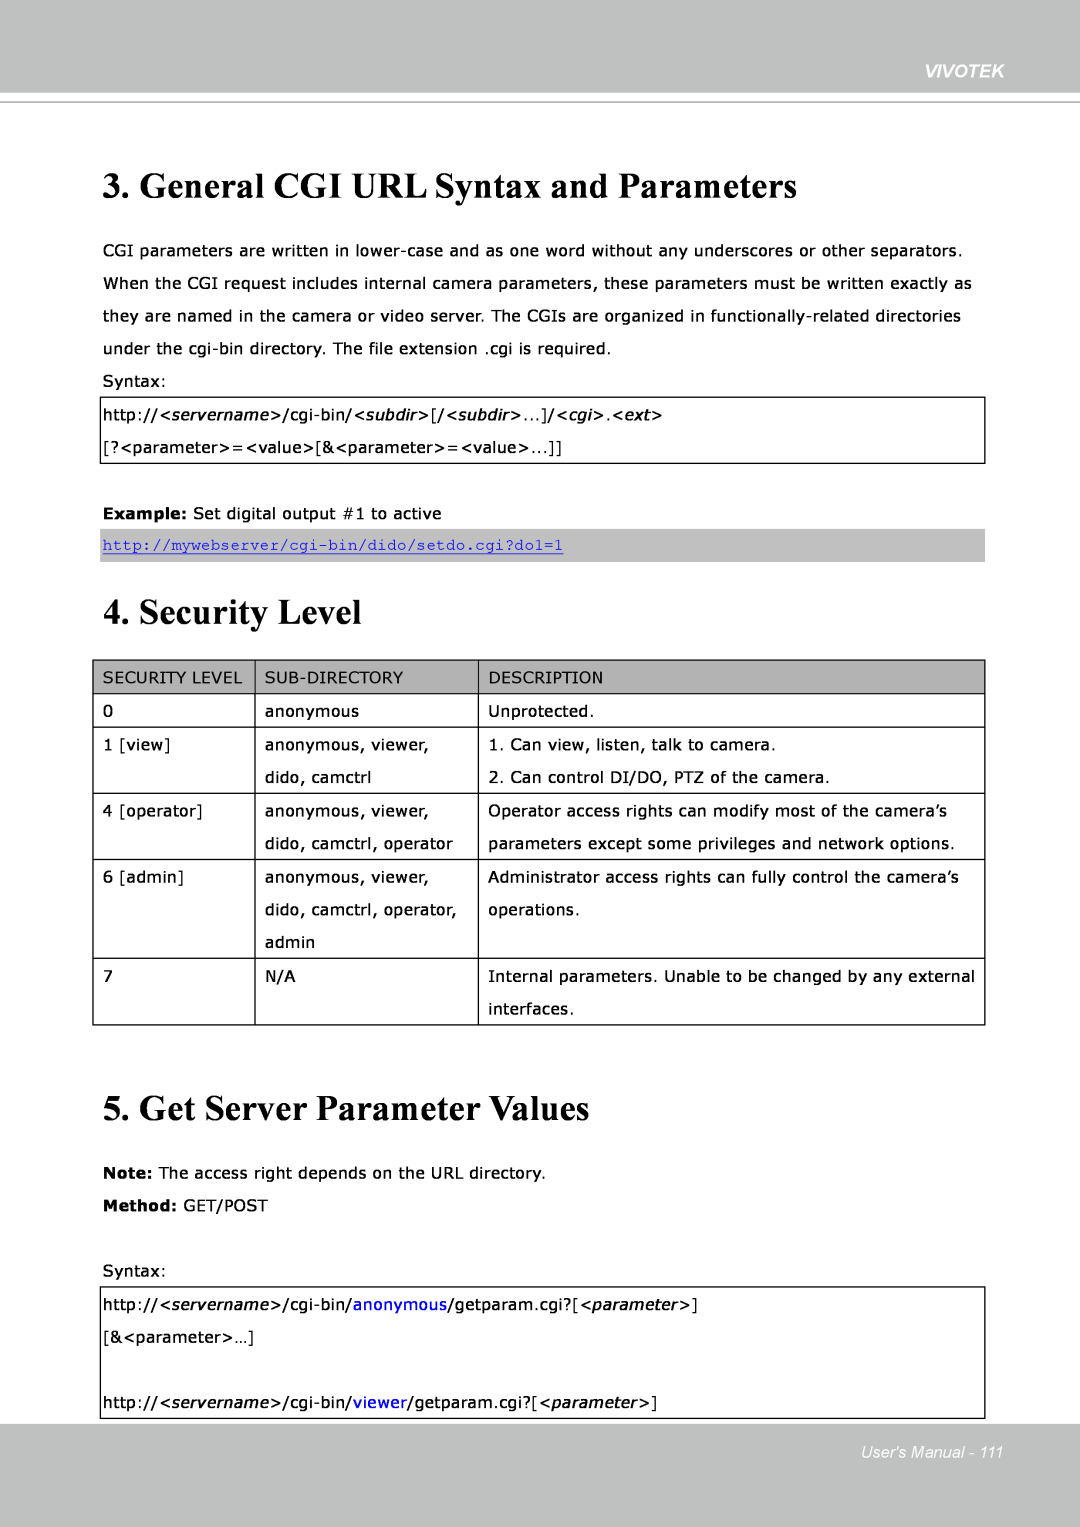 Vivotek IP8352 manual General CGI URL Syntax and Parameters, Security Level, Get Server Parameter Values, Vivotek 